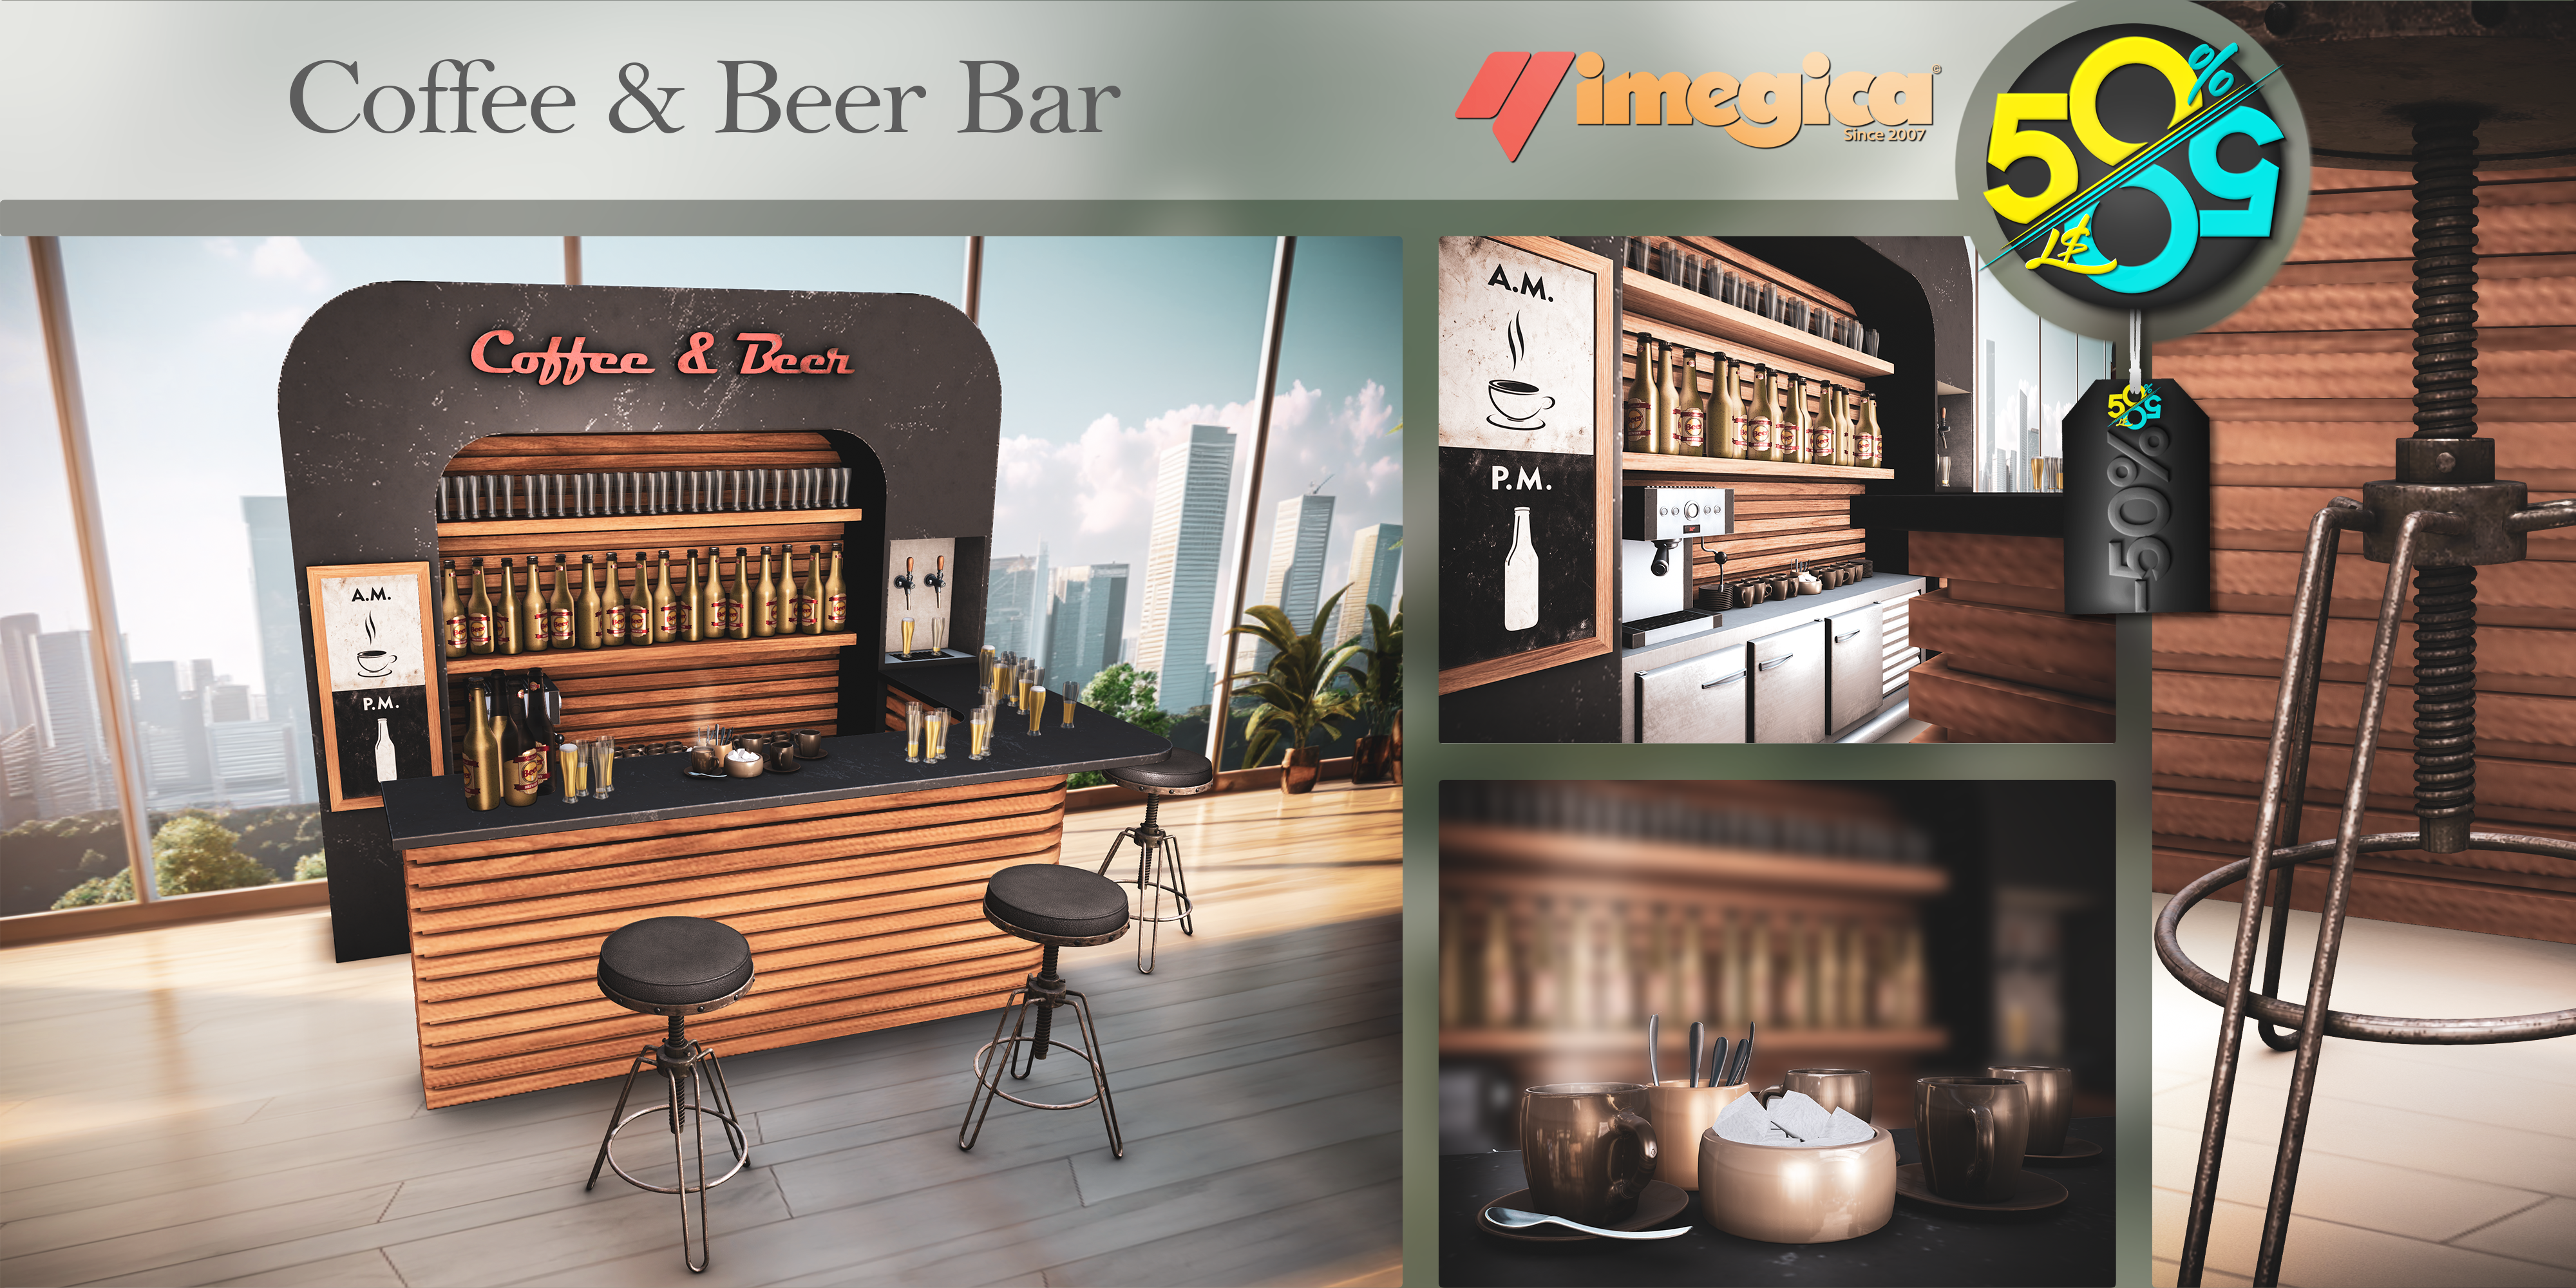 Imegica – Coffee & Beer Bar